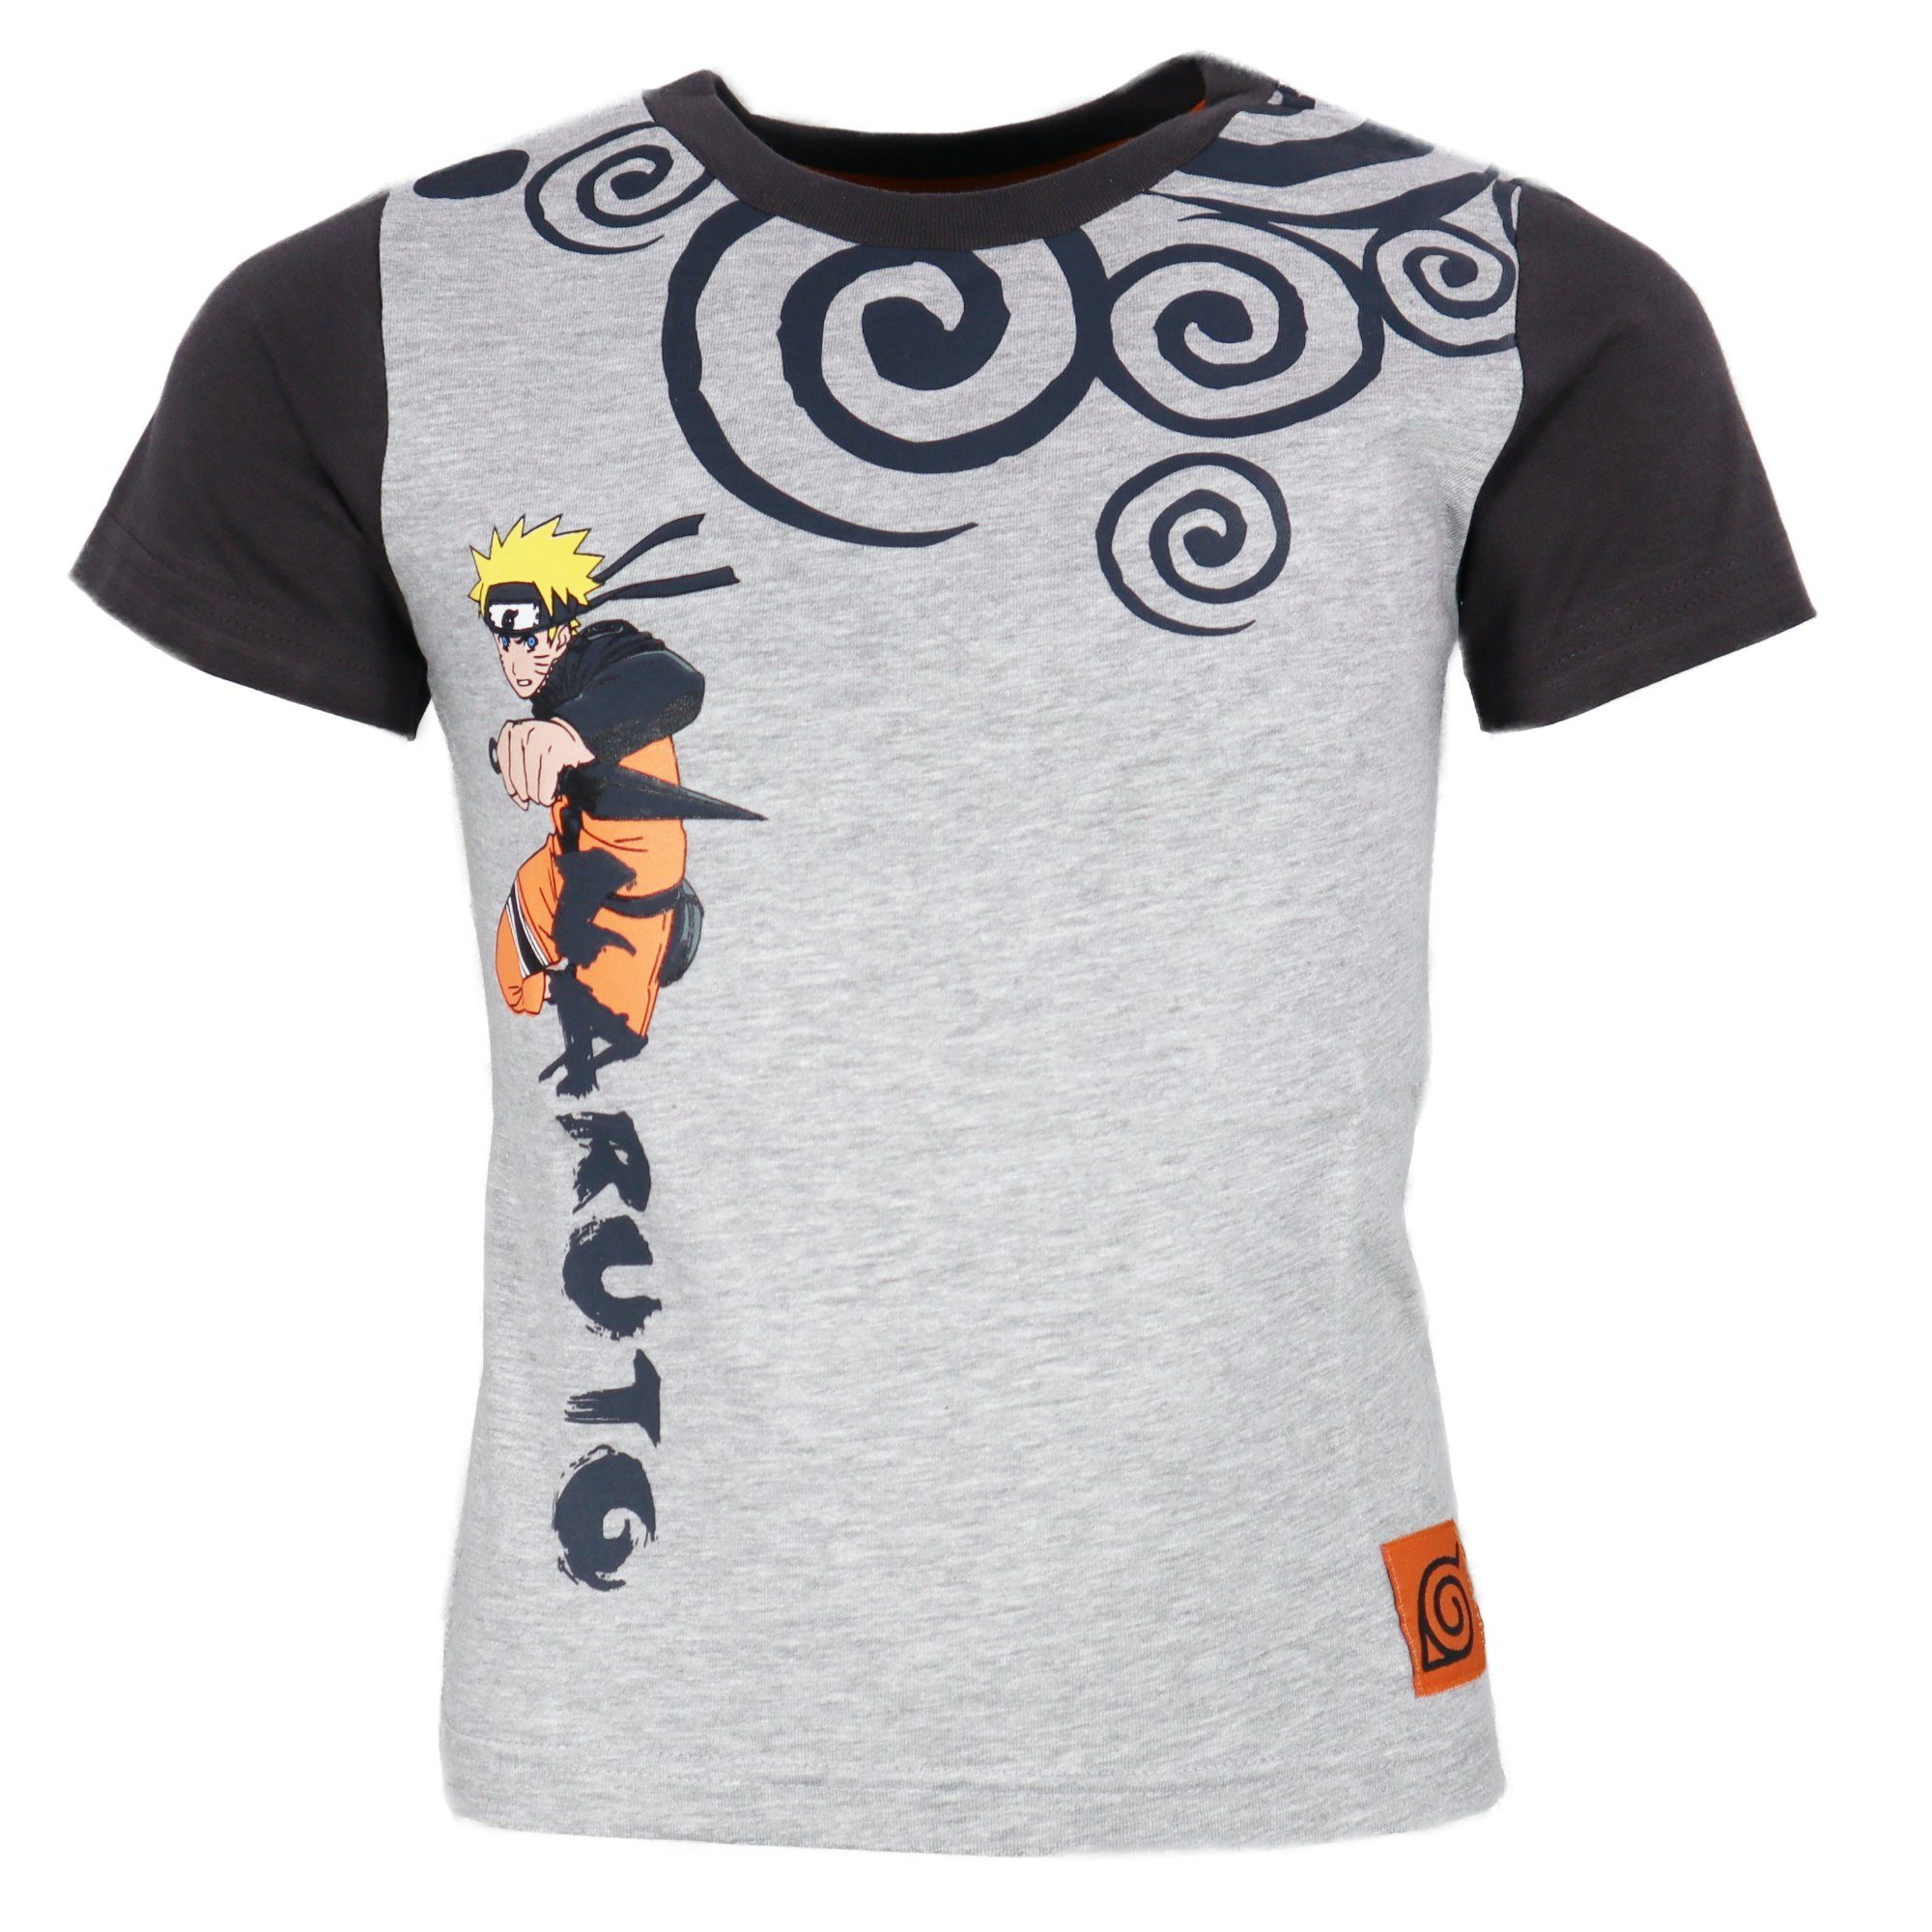 Naruto Print-Shirt Anime Naruto Shippuden Kinder Jungen T-Shirt Kurzarm Shirt Gr. 104 bis 140 Grau